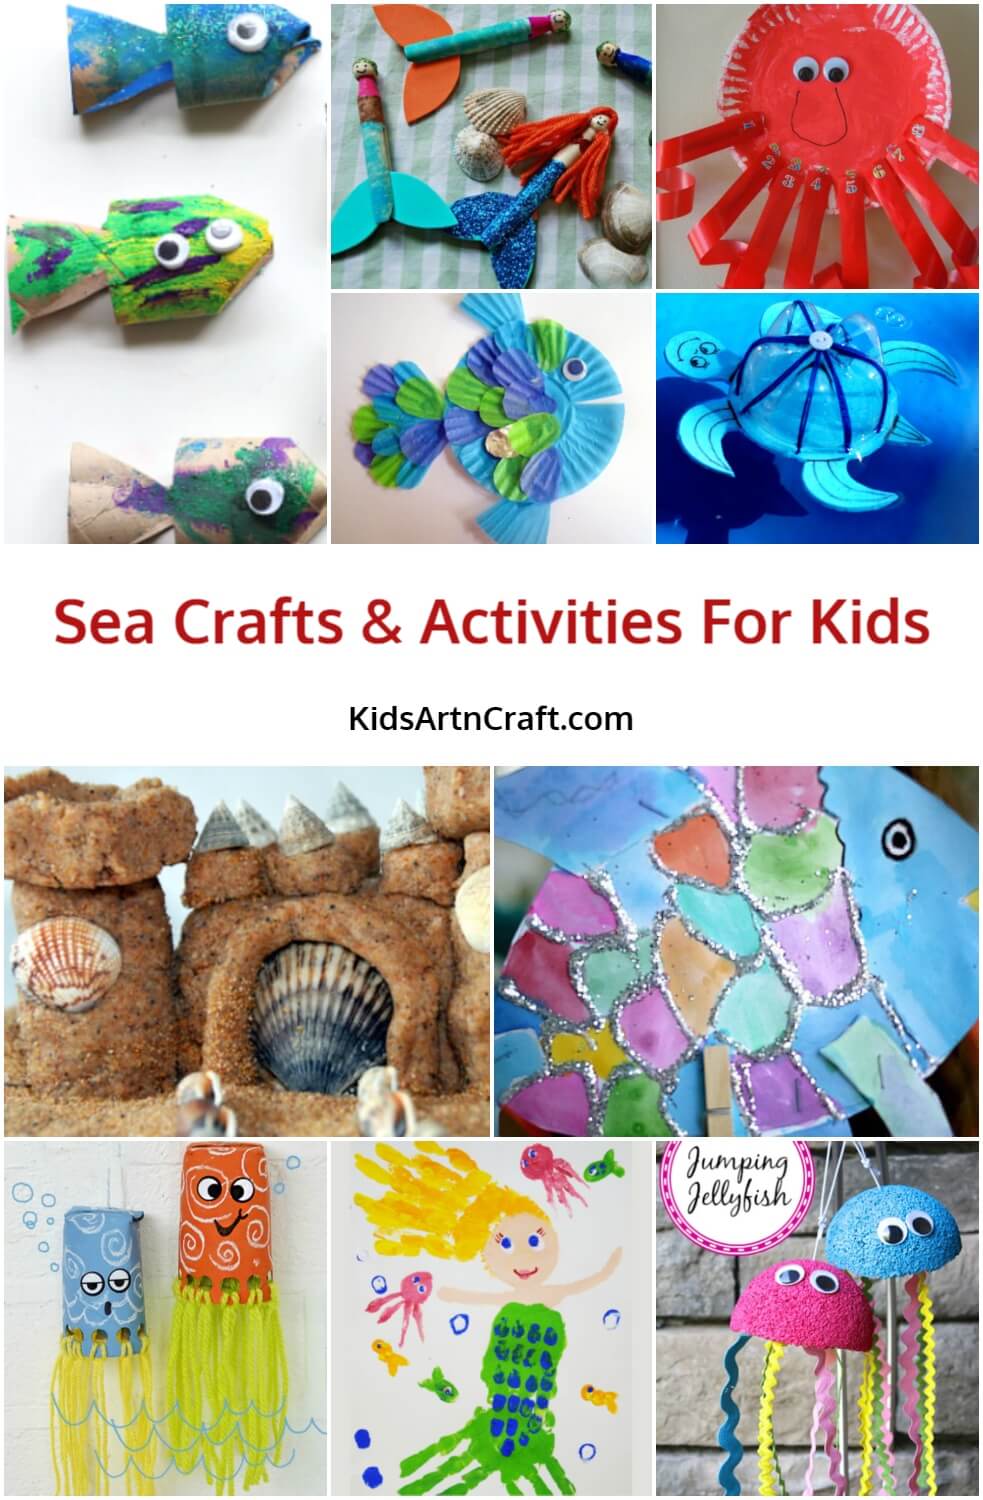  Sea Crafts & Activities For Kids